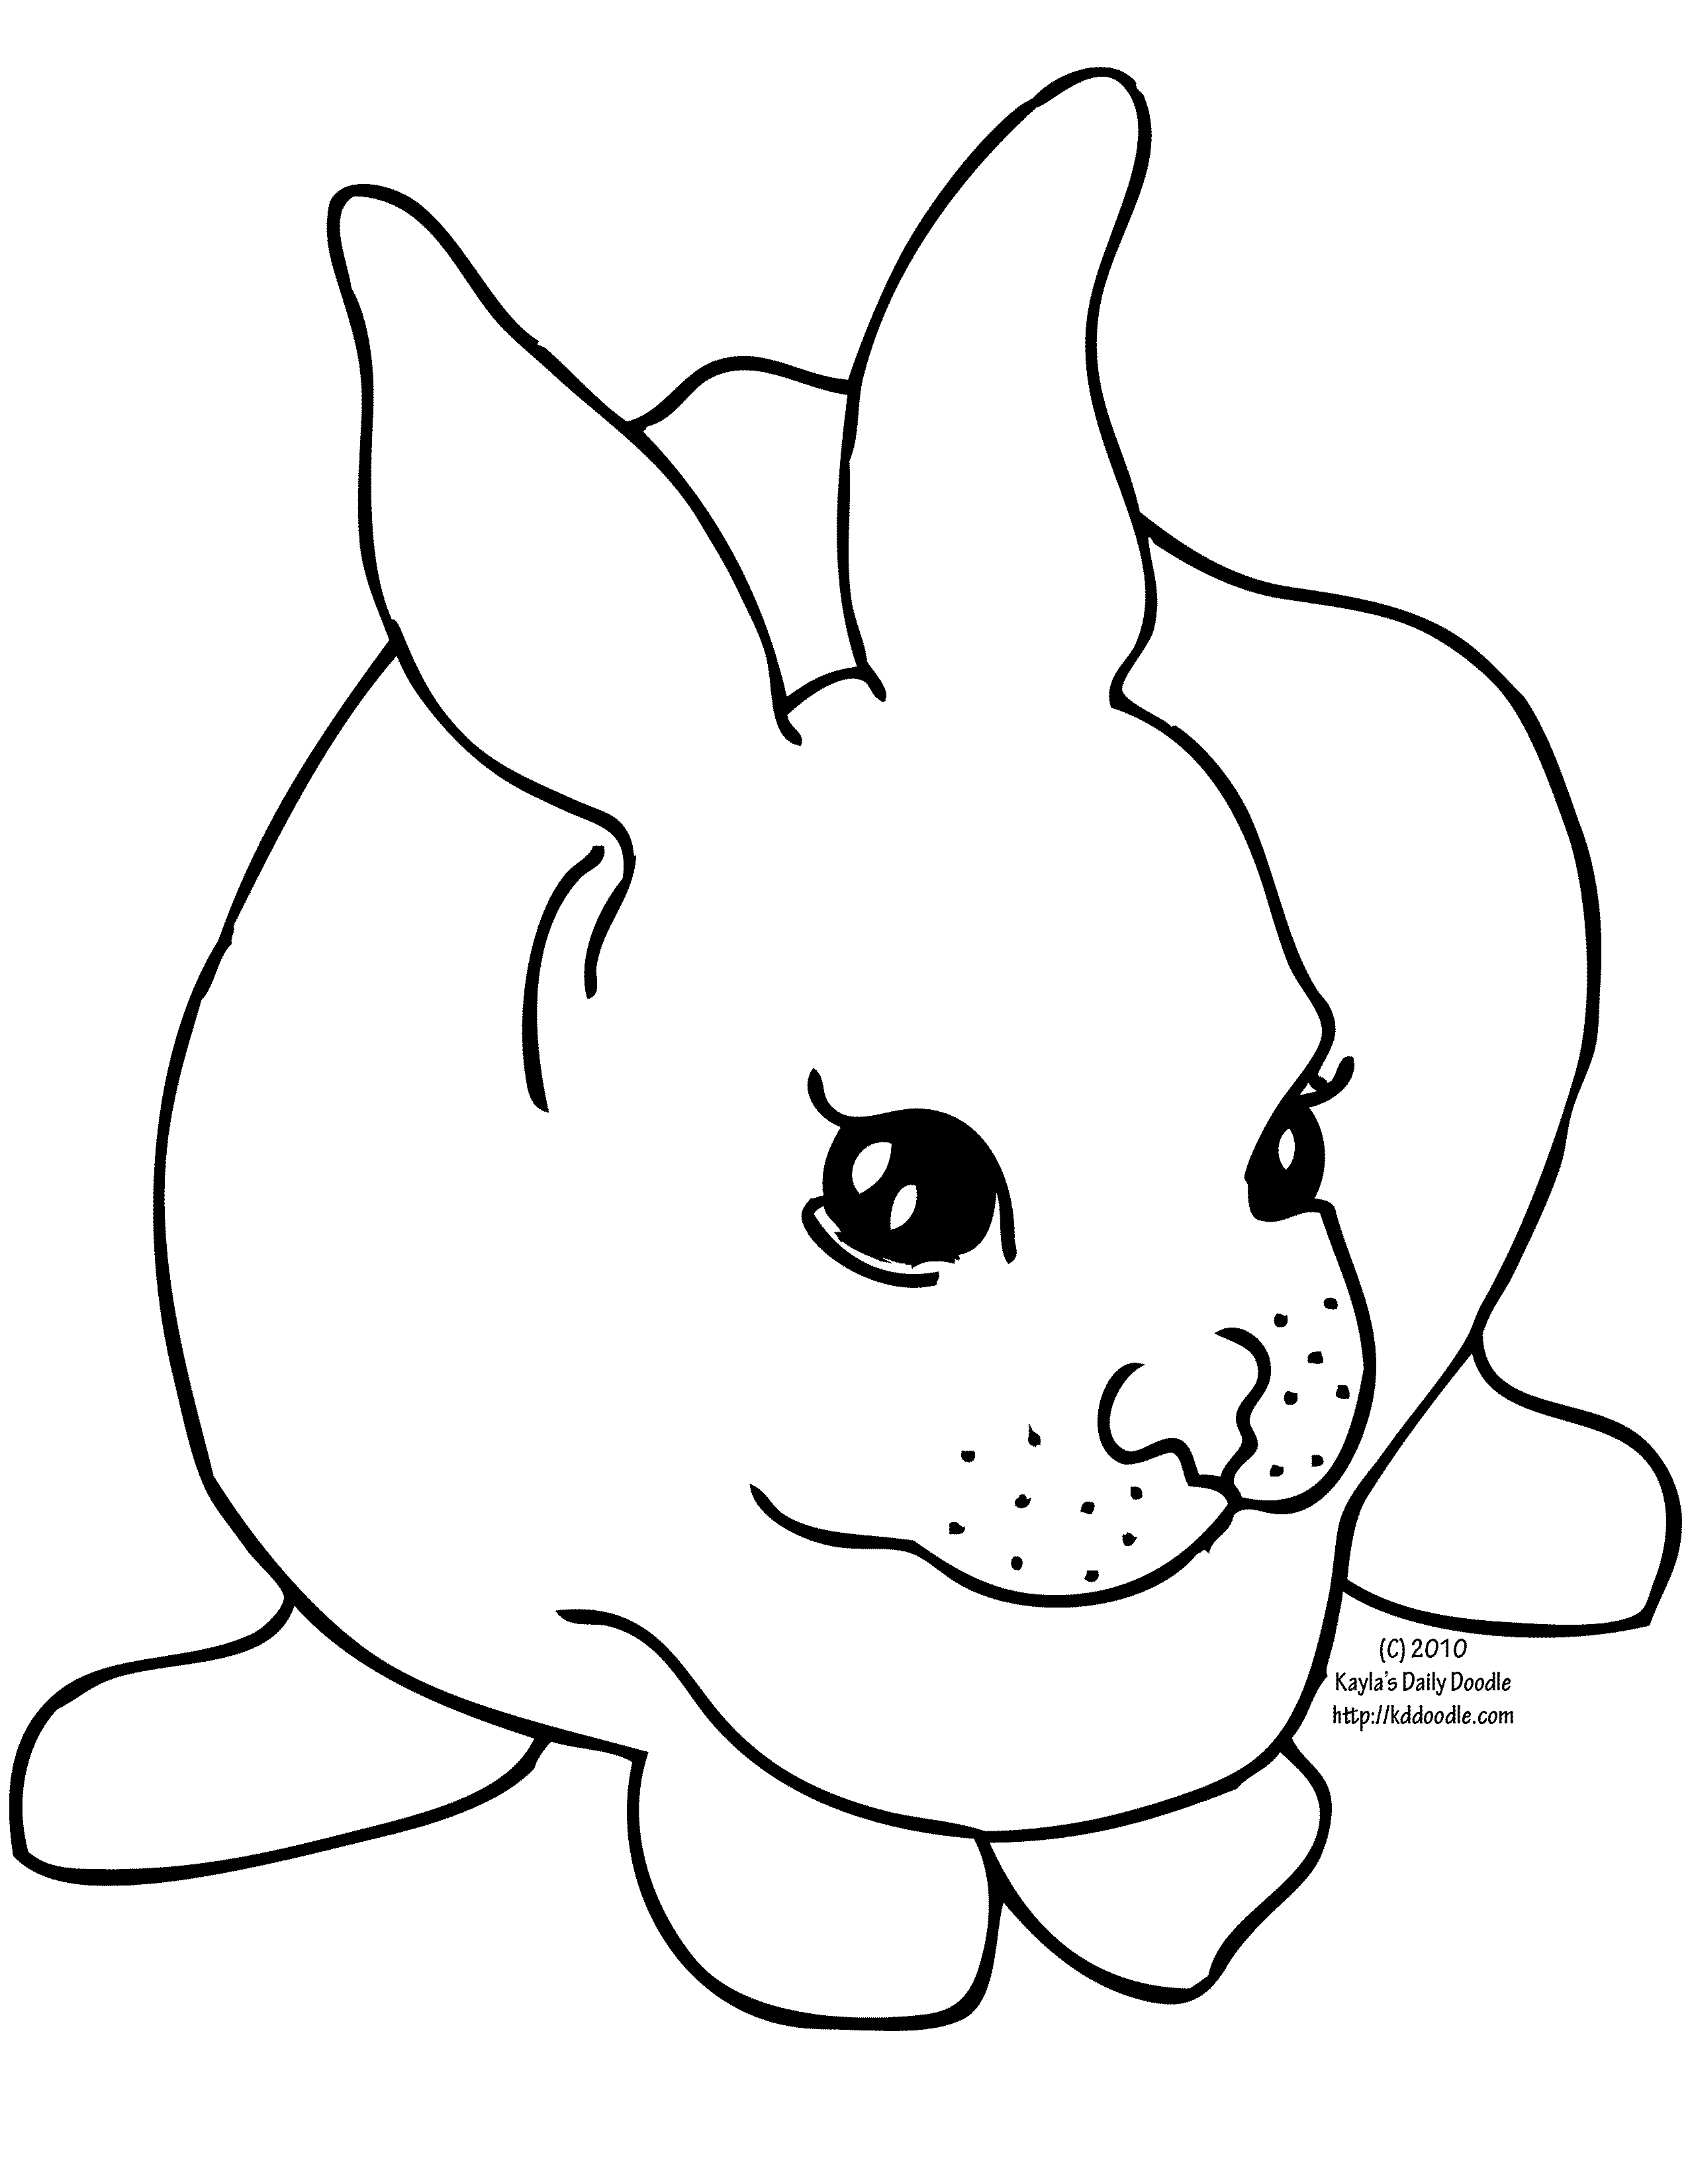 Free Rabbit Line Art, Download Free Clip Art, Free Clip Art on Clipart